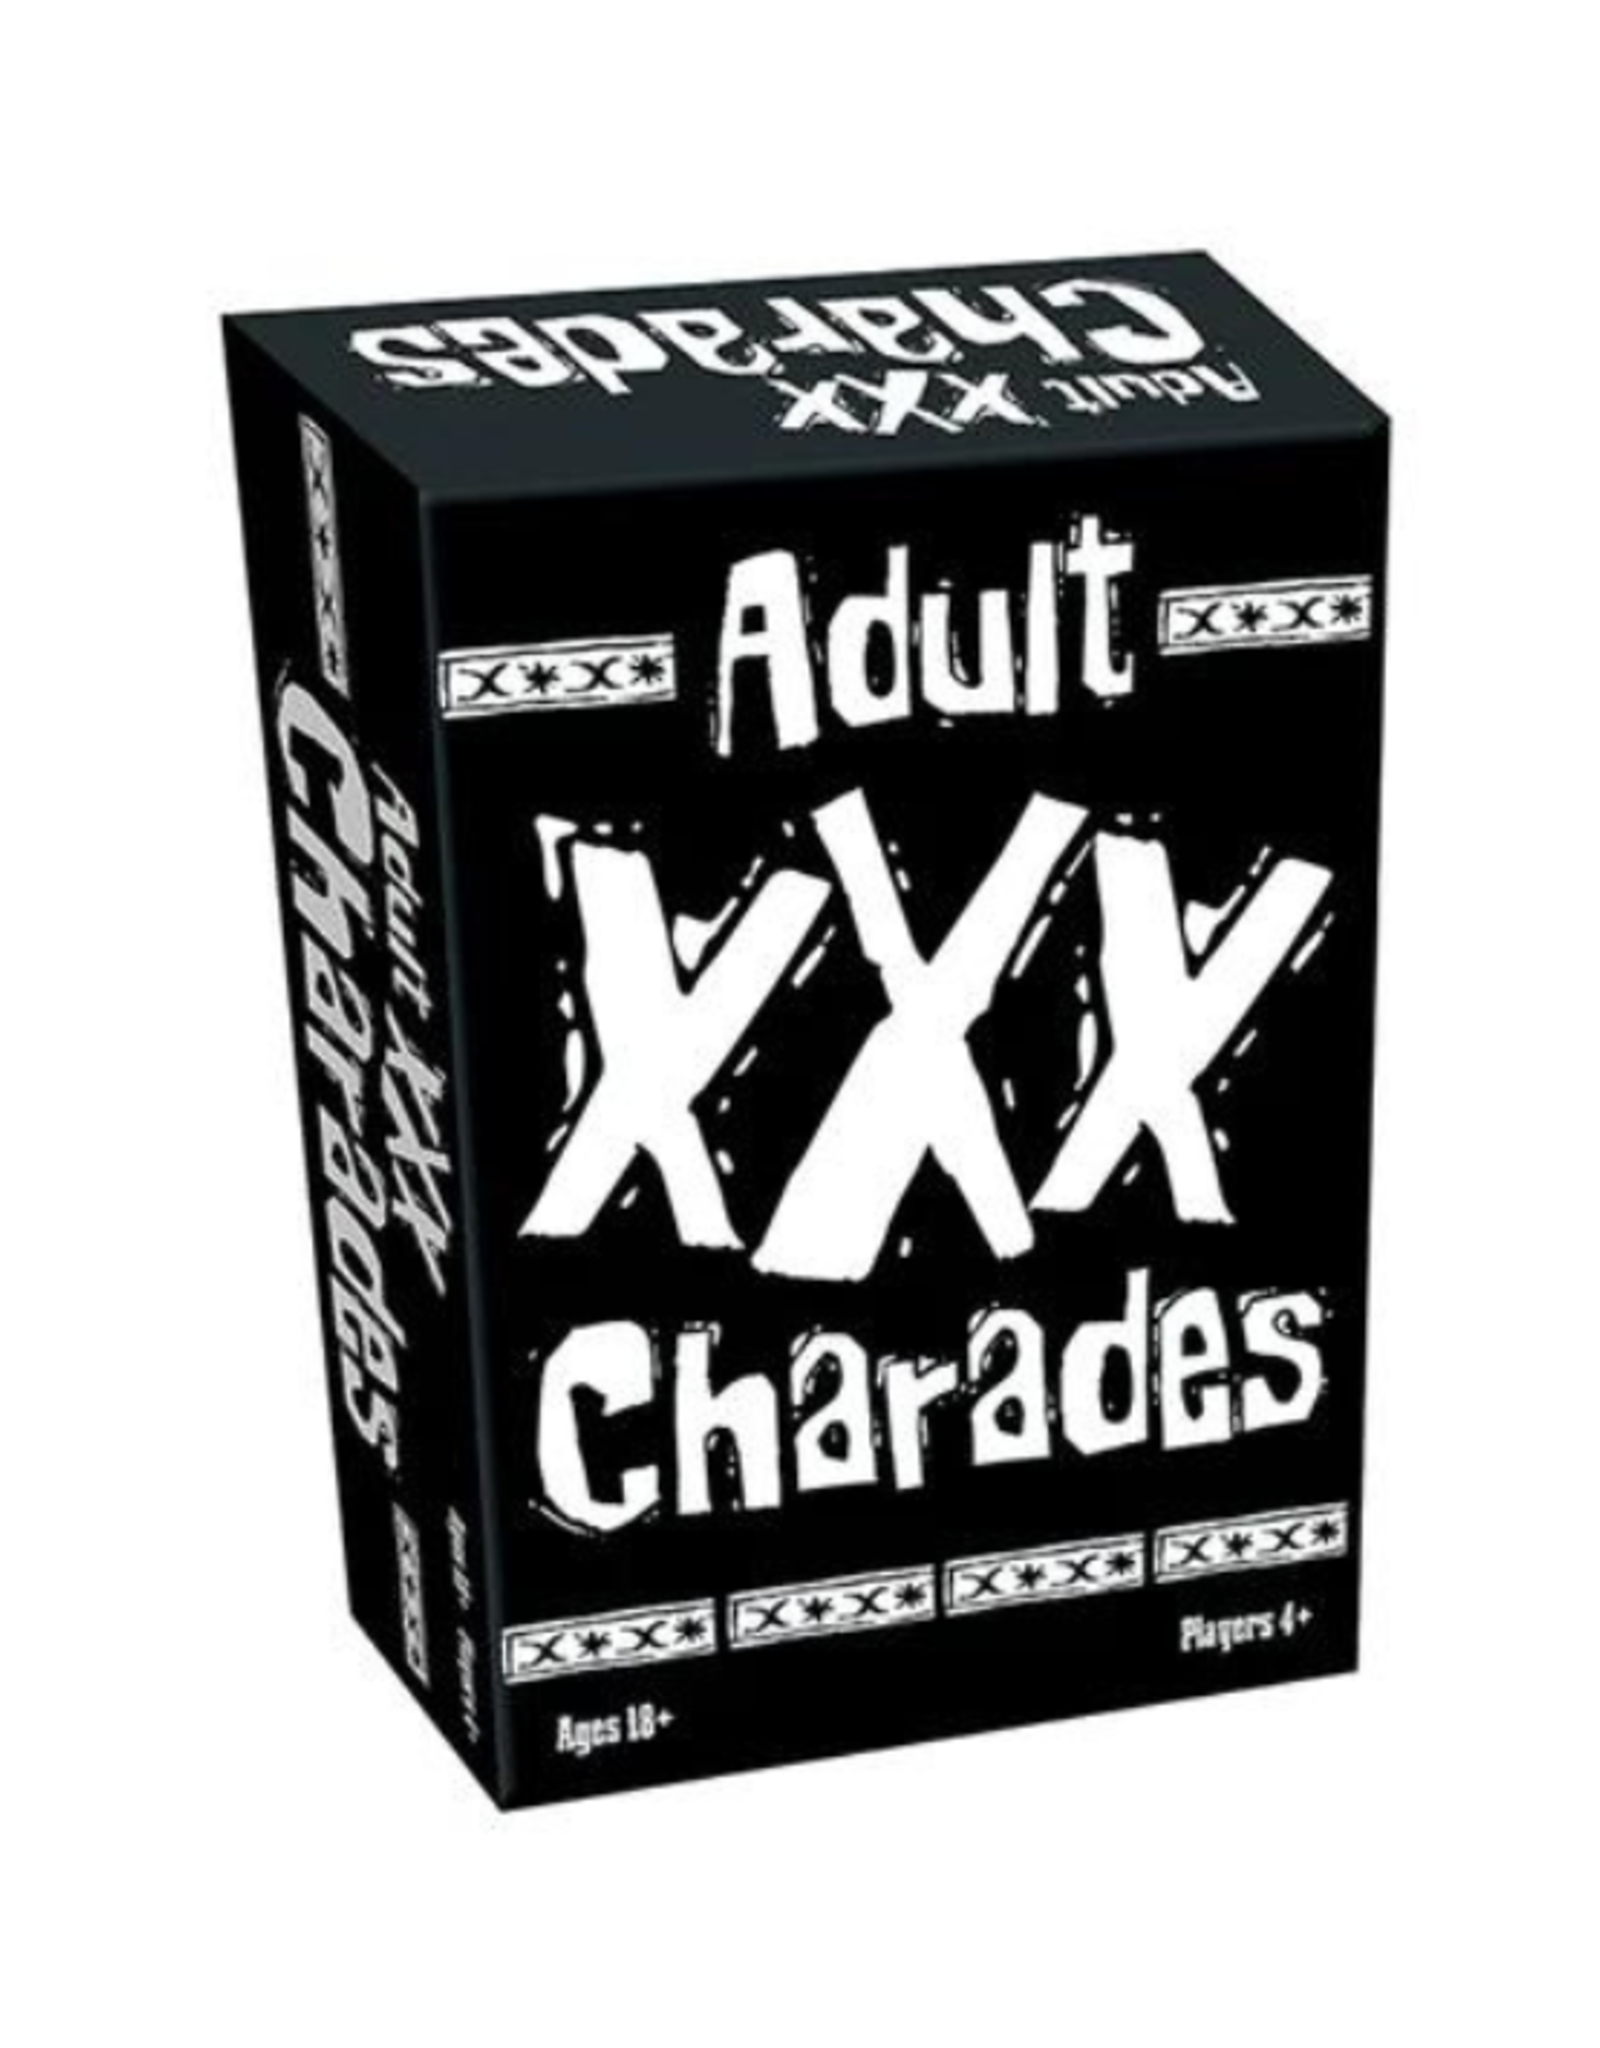 Outset Media Outset Media - Adult XXX Charades (18+)